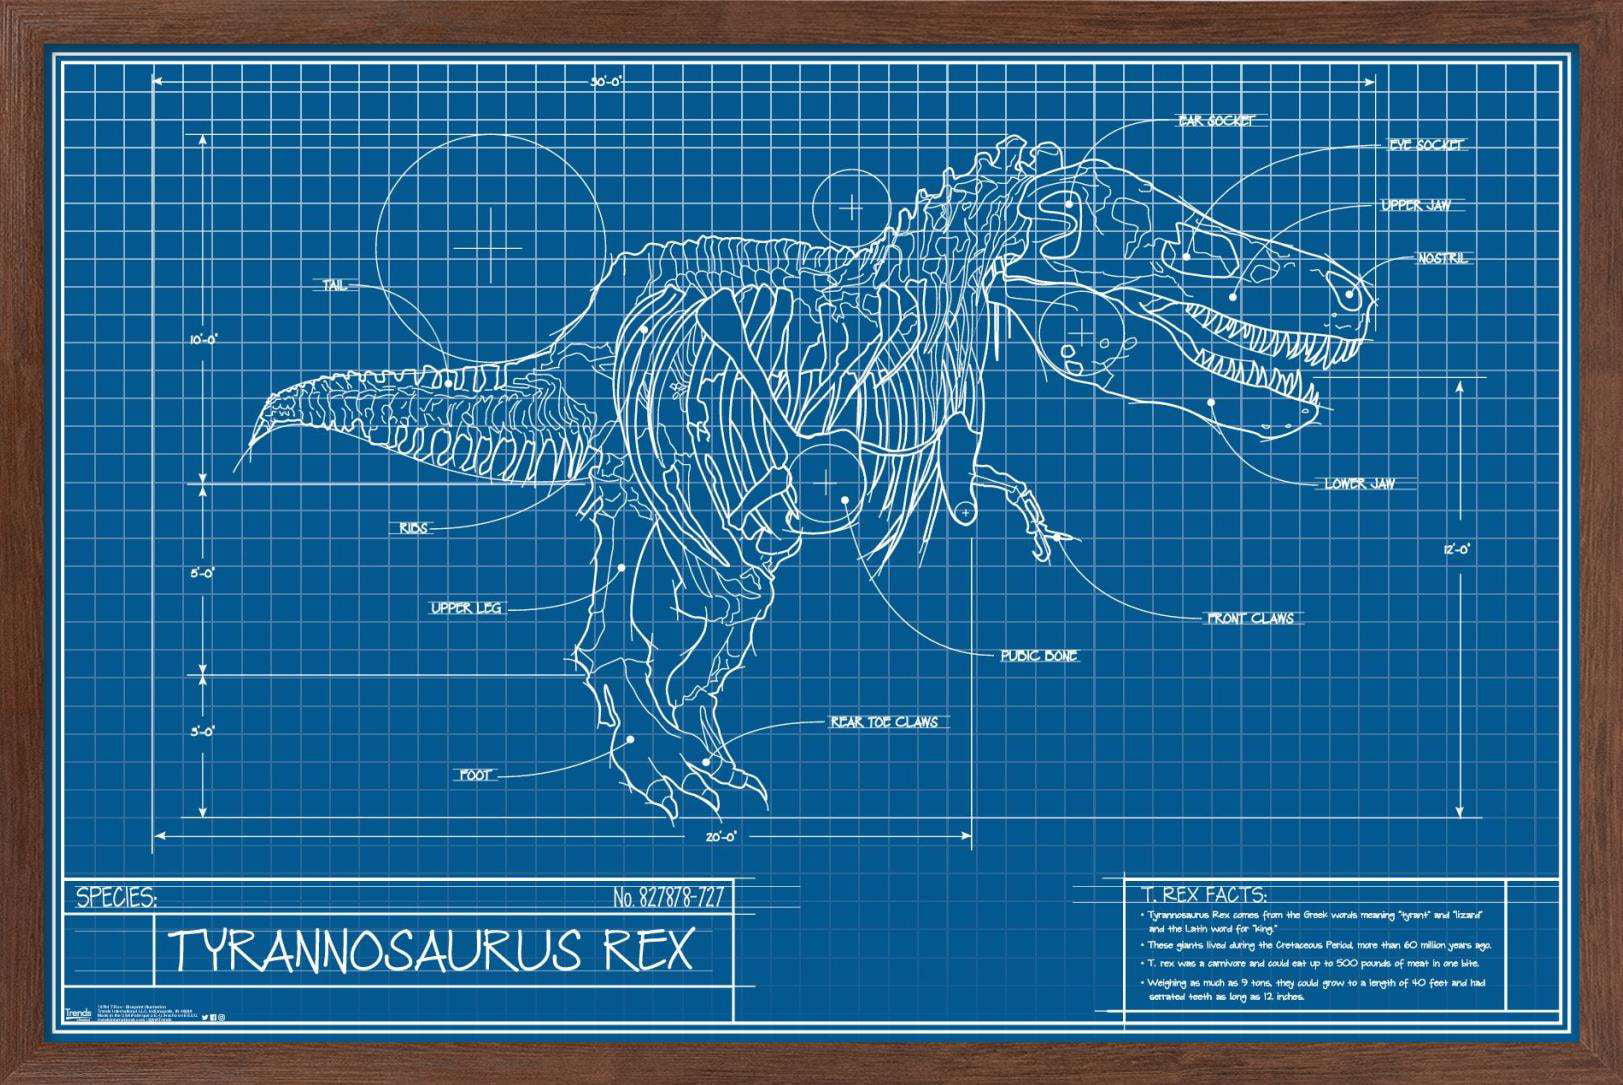 T-Rex Minimalist Design Clock Dinosaurs Breeds Modern Wall Clock Nursery Decor 